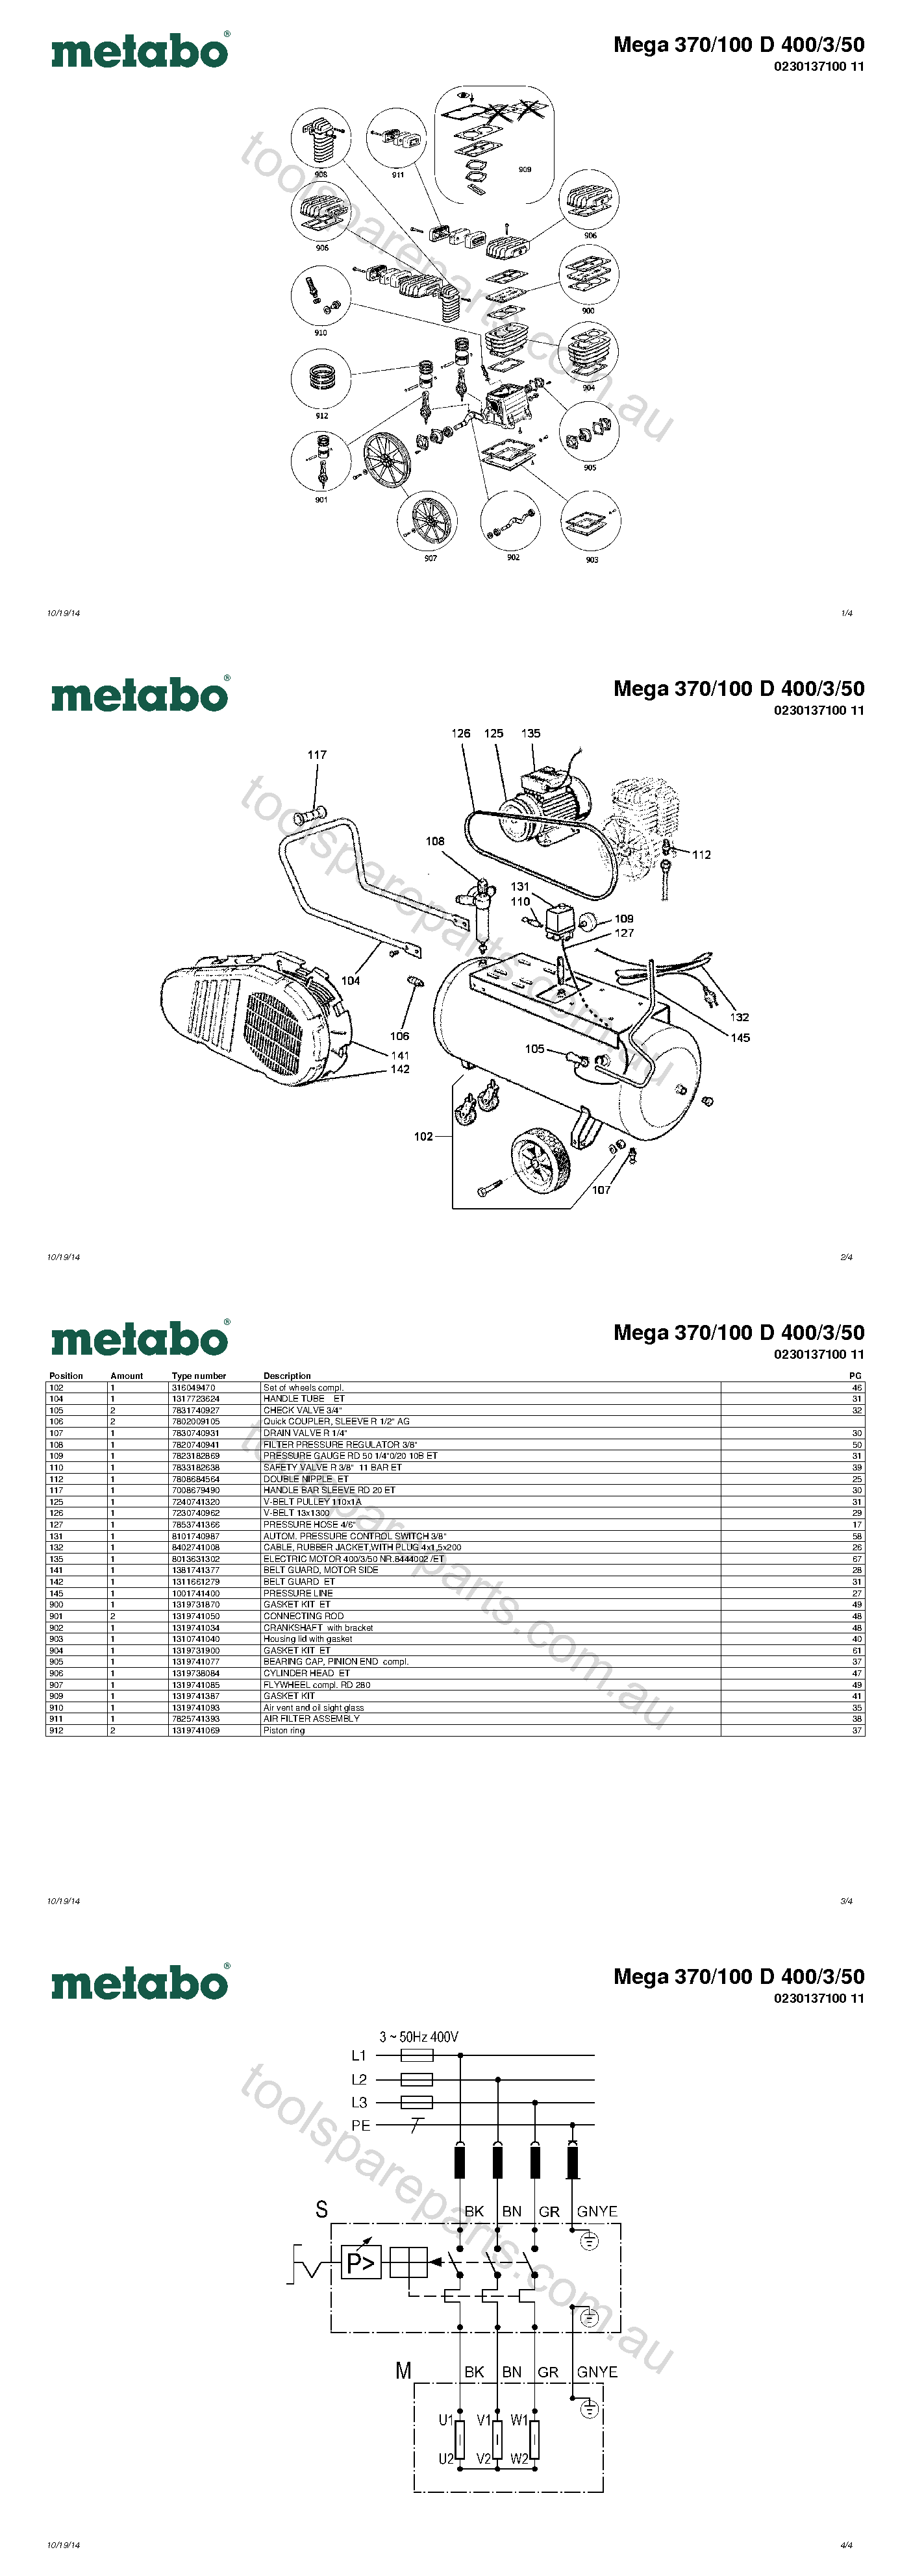 Metabo Mega 370/100 D 400/3/50 0230137100 11  Diagram 1